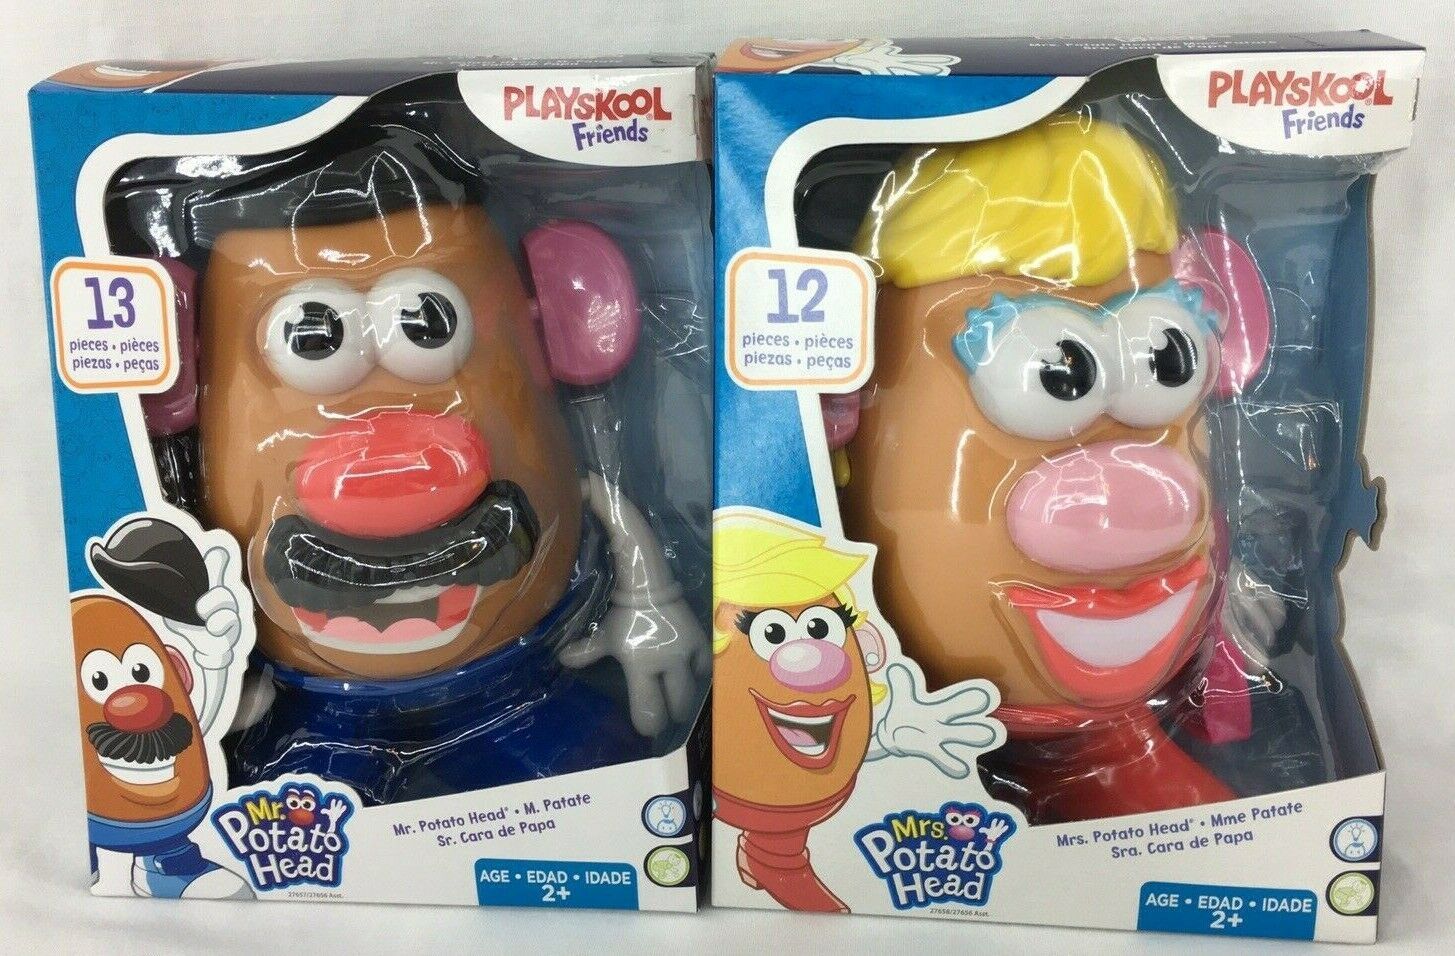 Mr. Potato Head & Mrs. Potato Head Classic Retro Toys Set / 2 NEW ORIGINAL BOXES - $46.74